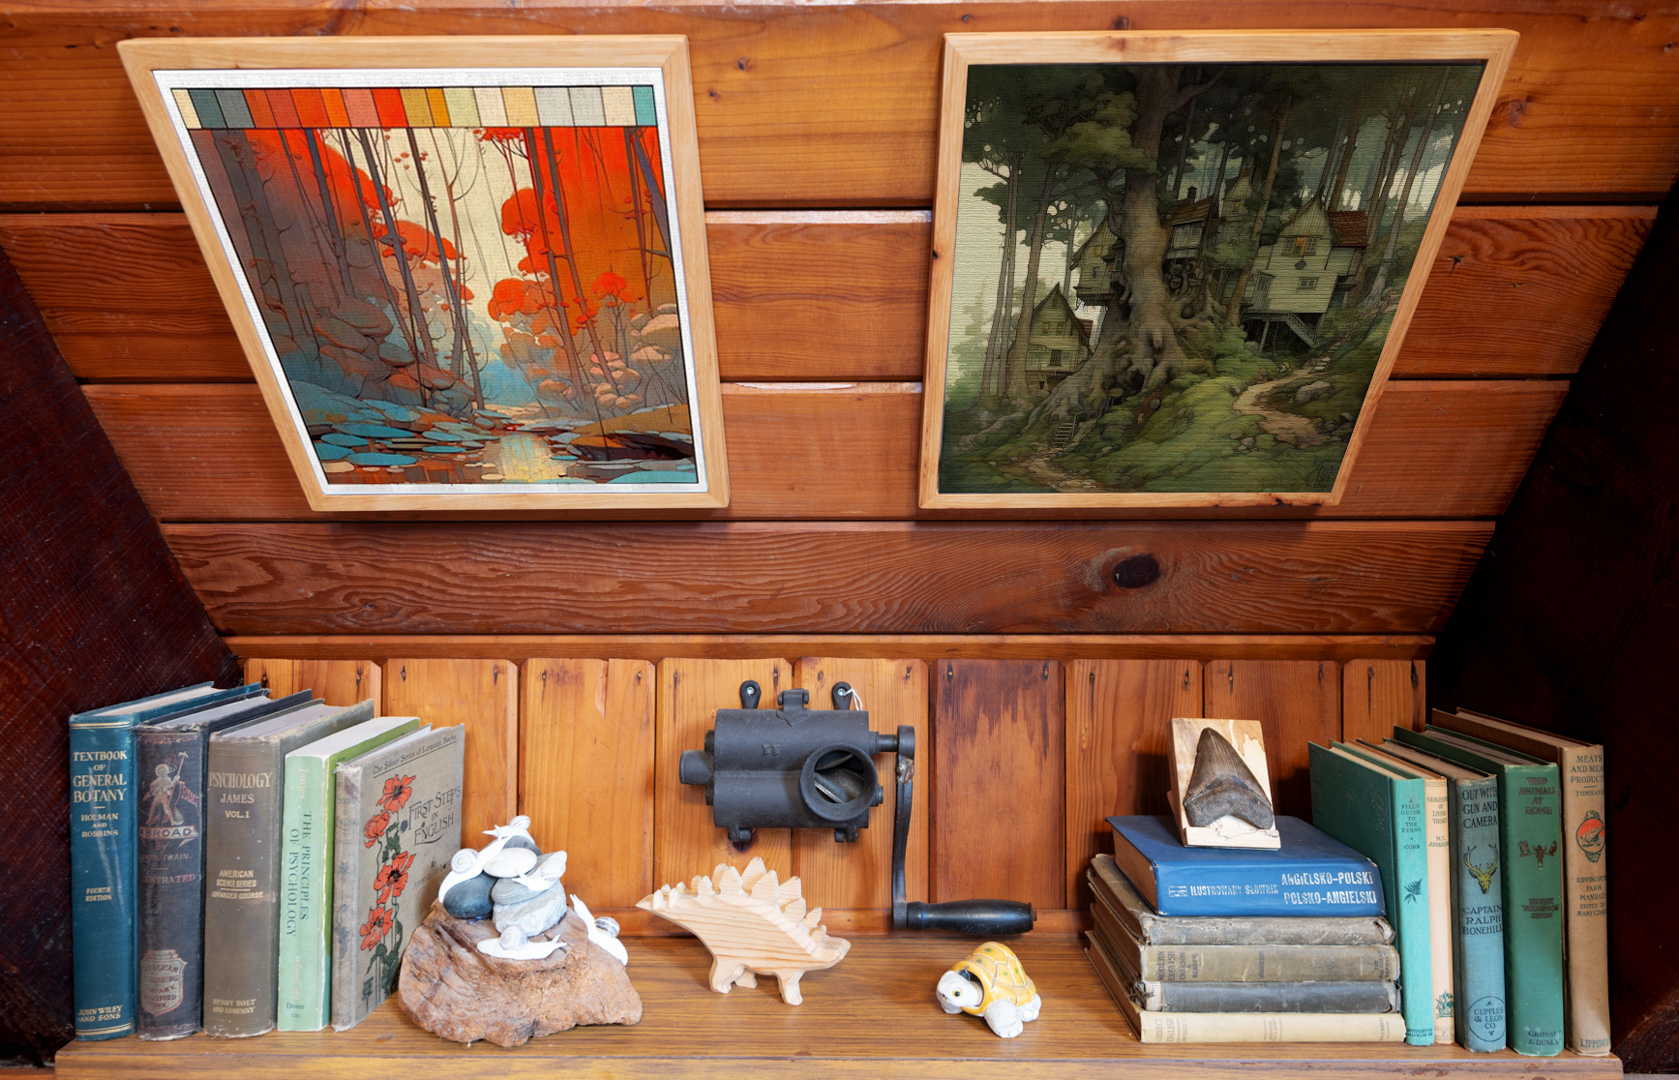 Steve Mcdonald prints in hickory frames in Aframe cabin